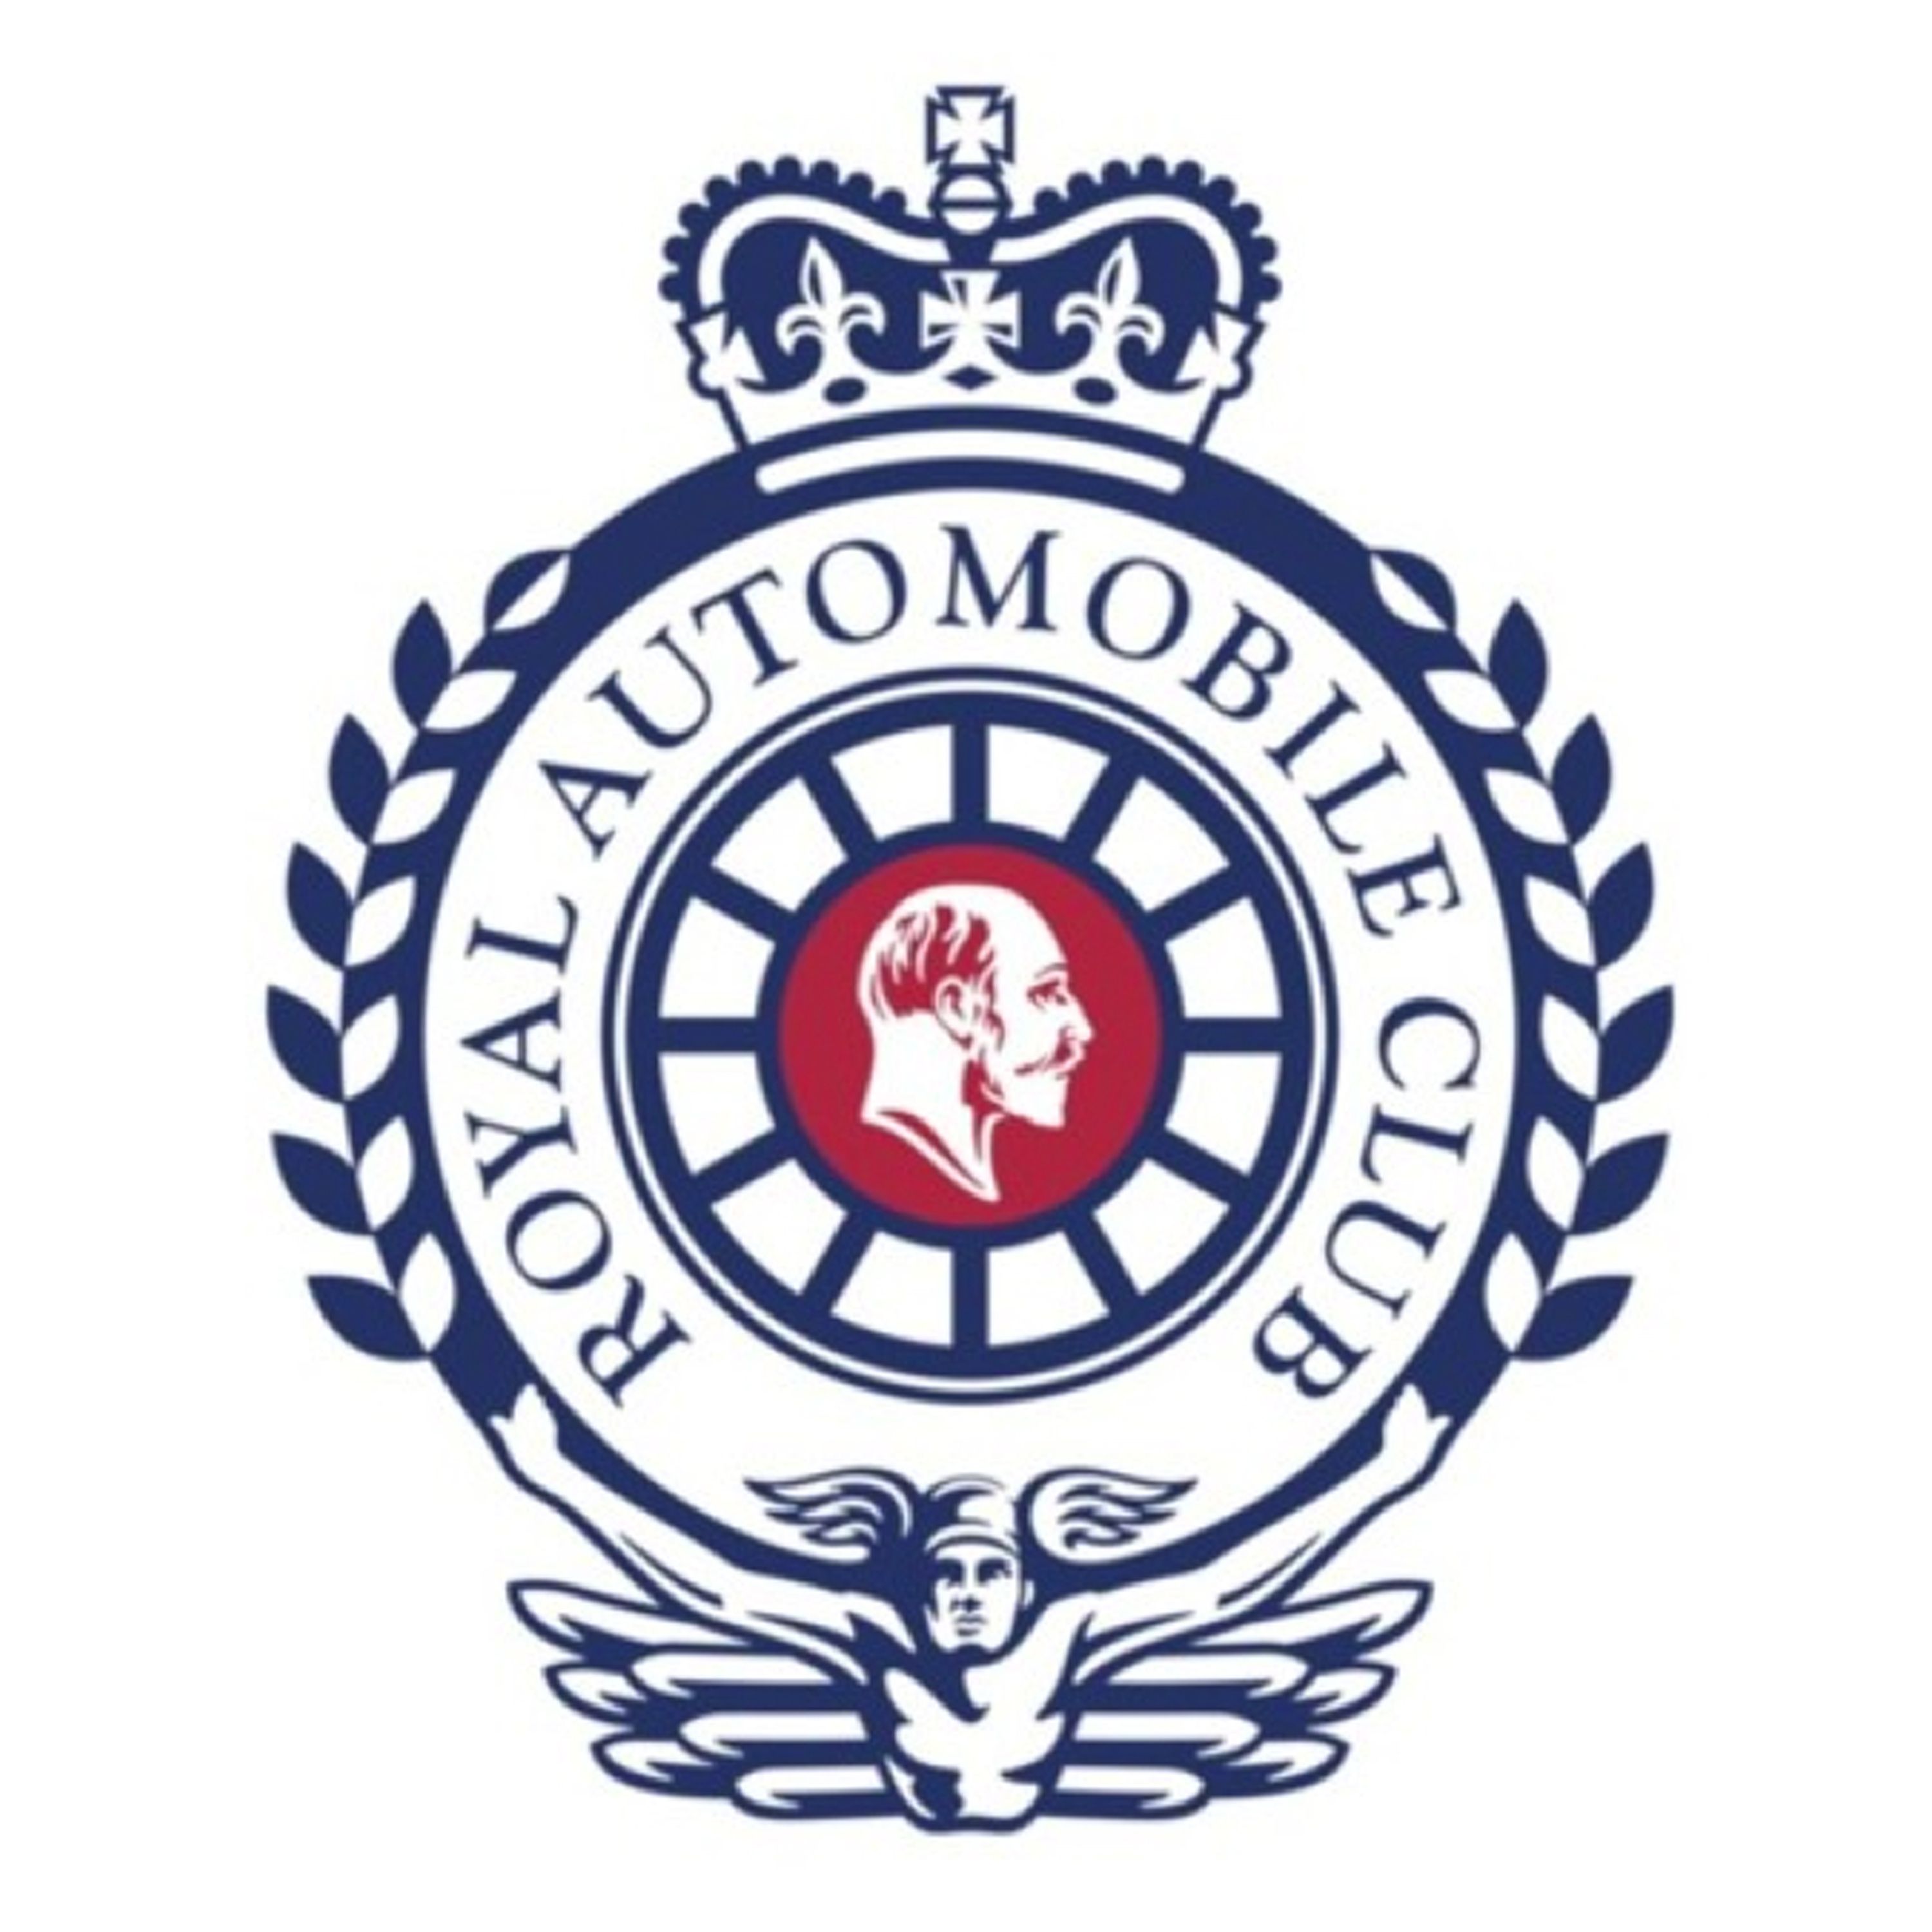 David Hobbs: Royal Automobile Club Talk Show in association with Motor Sport